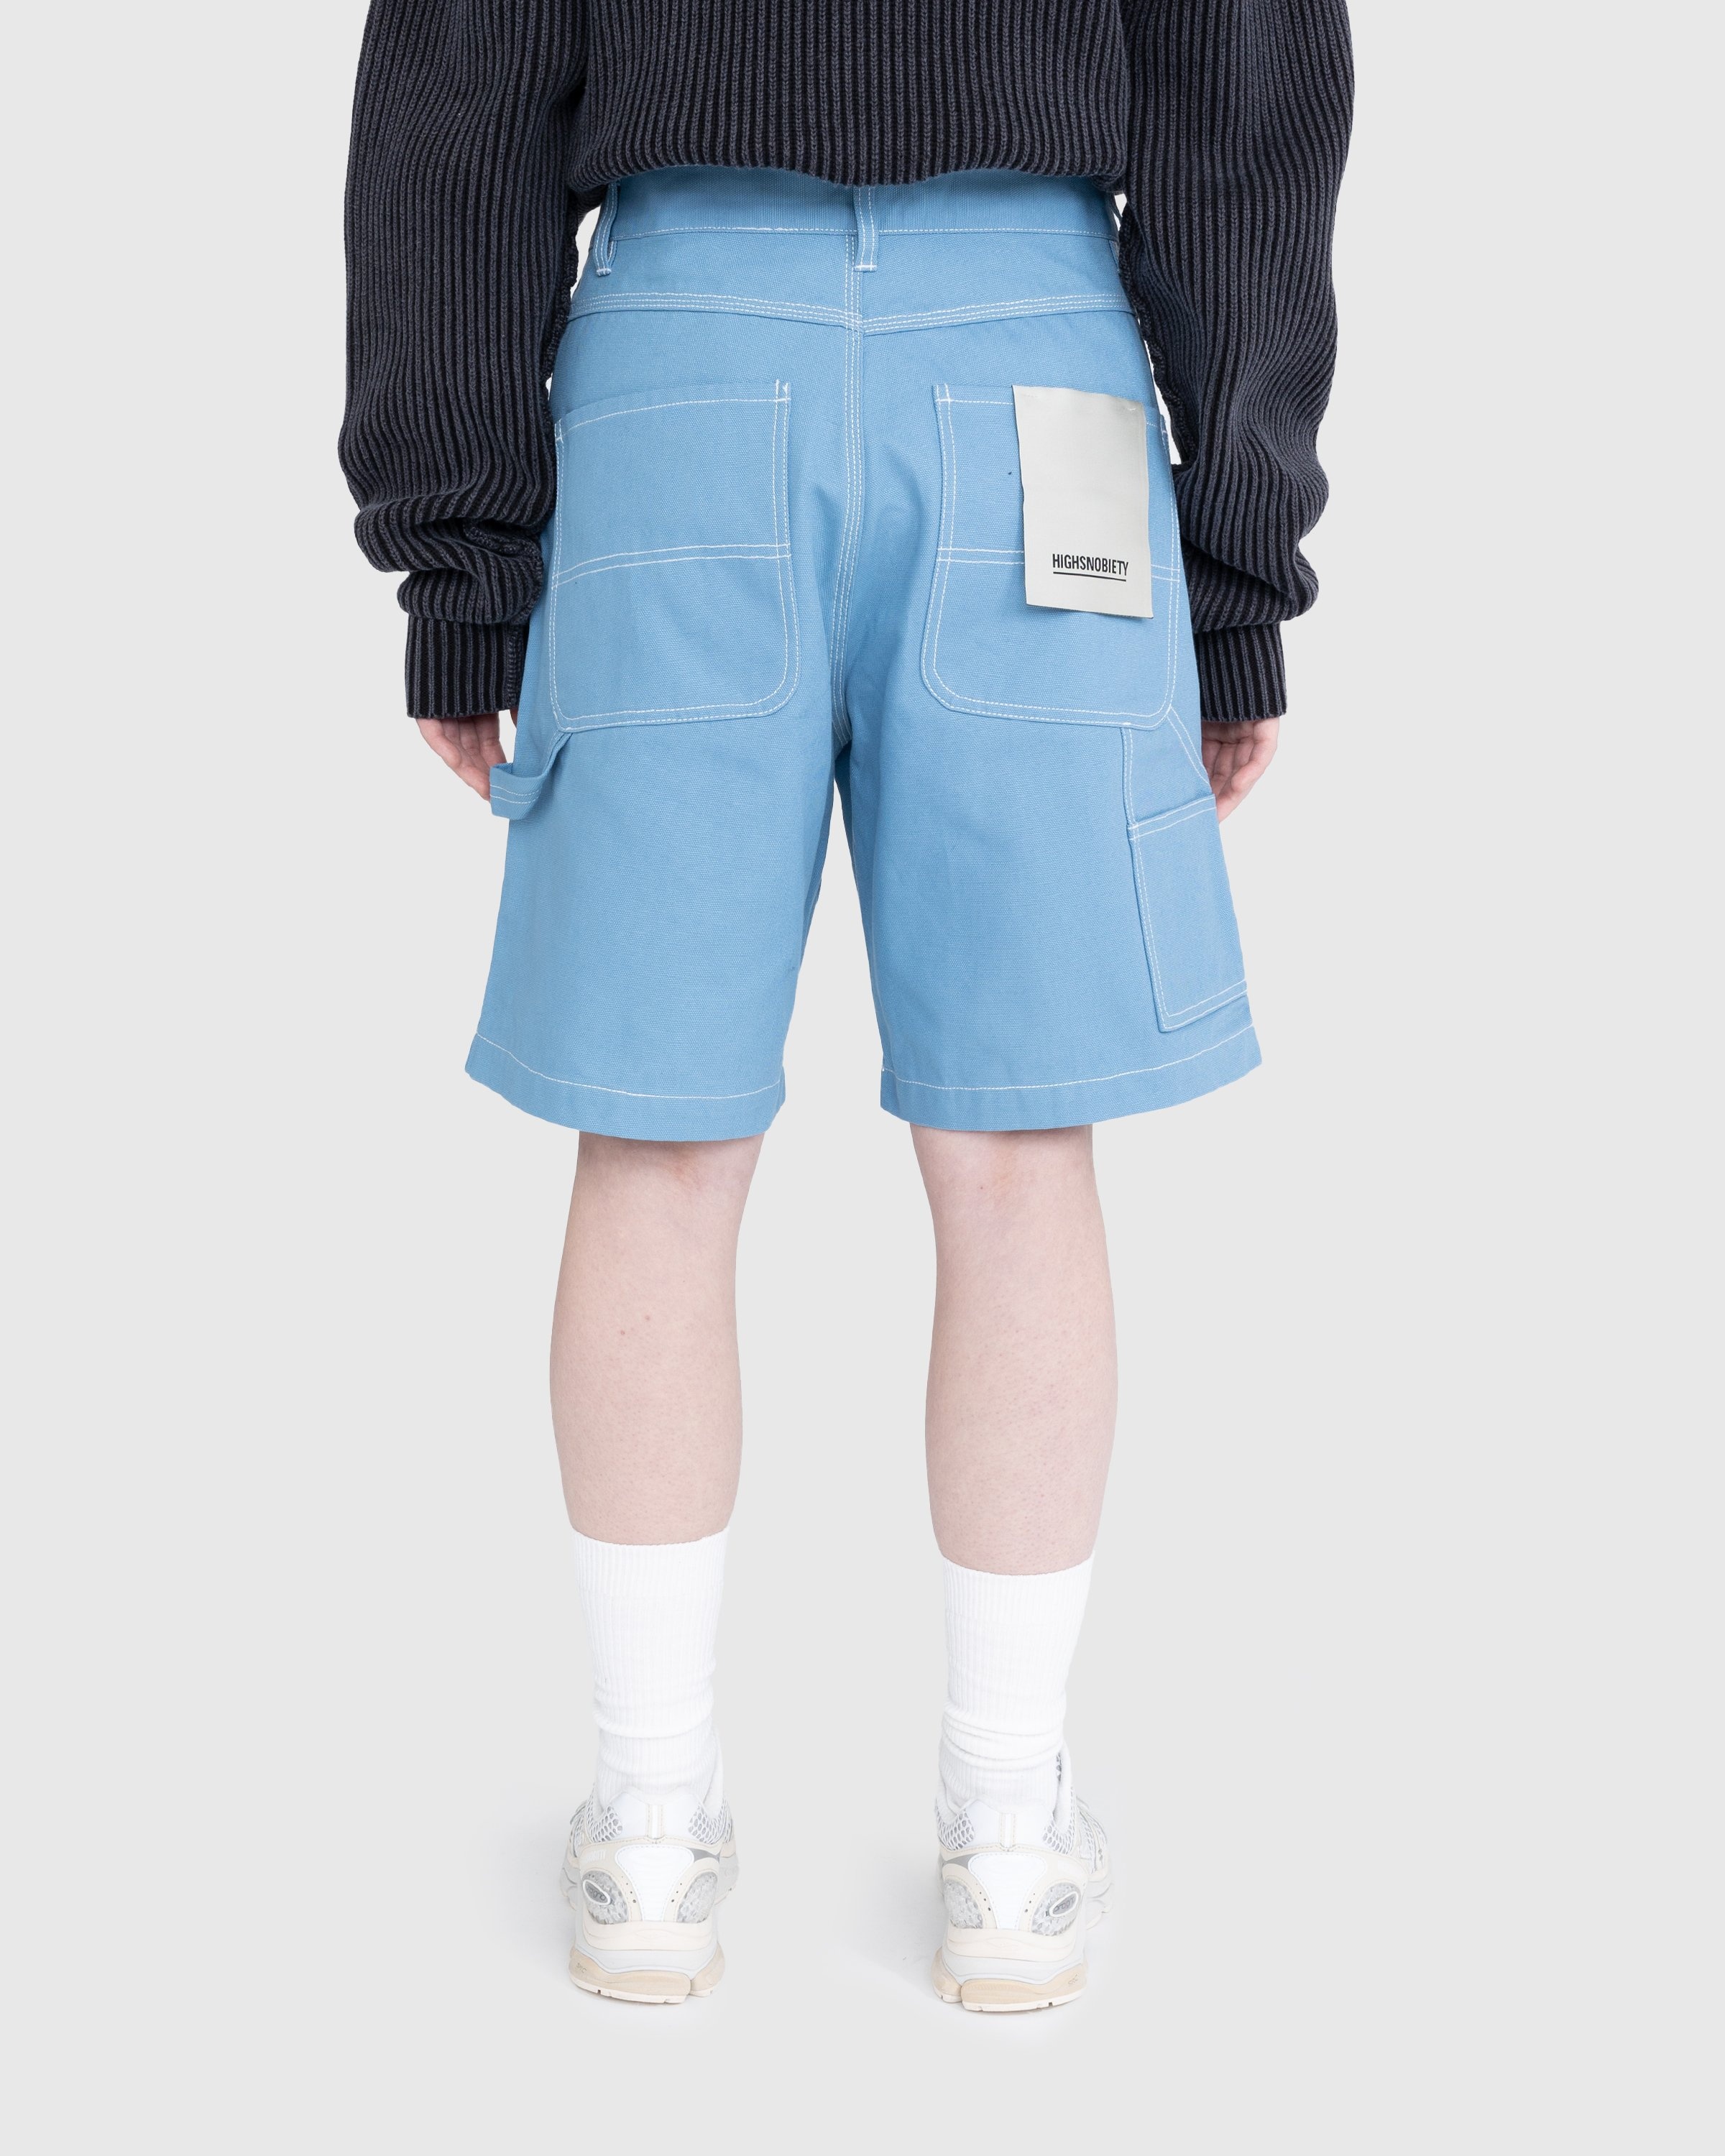 Highsnobiety – Carpenter Shorts Light Blue - Shorts - Blue - Image 4